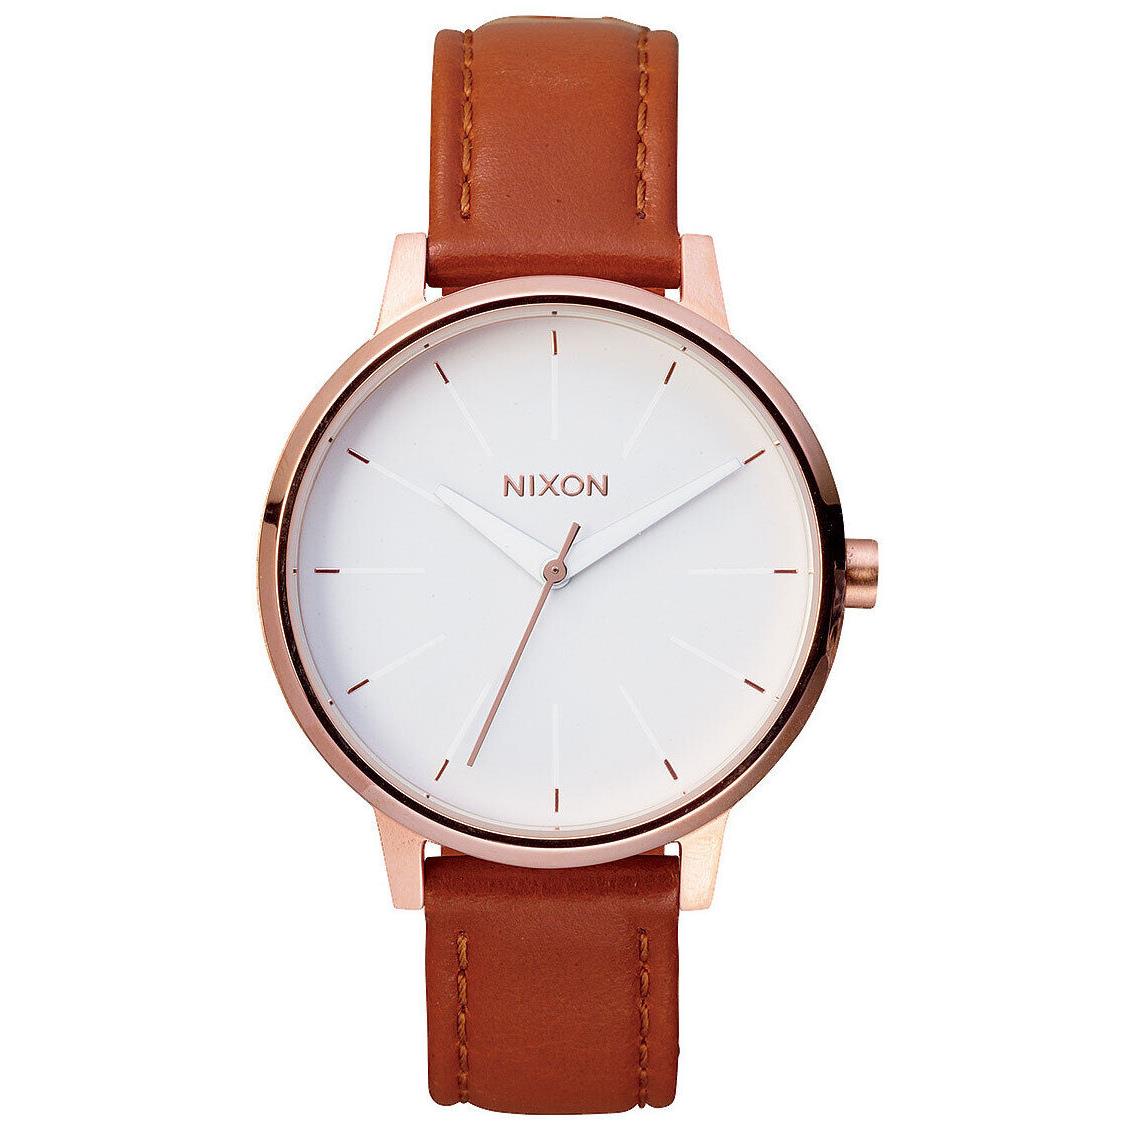 Nixon Kensington Leather Watch - Rose Gold / White